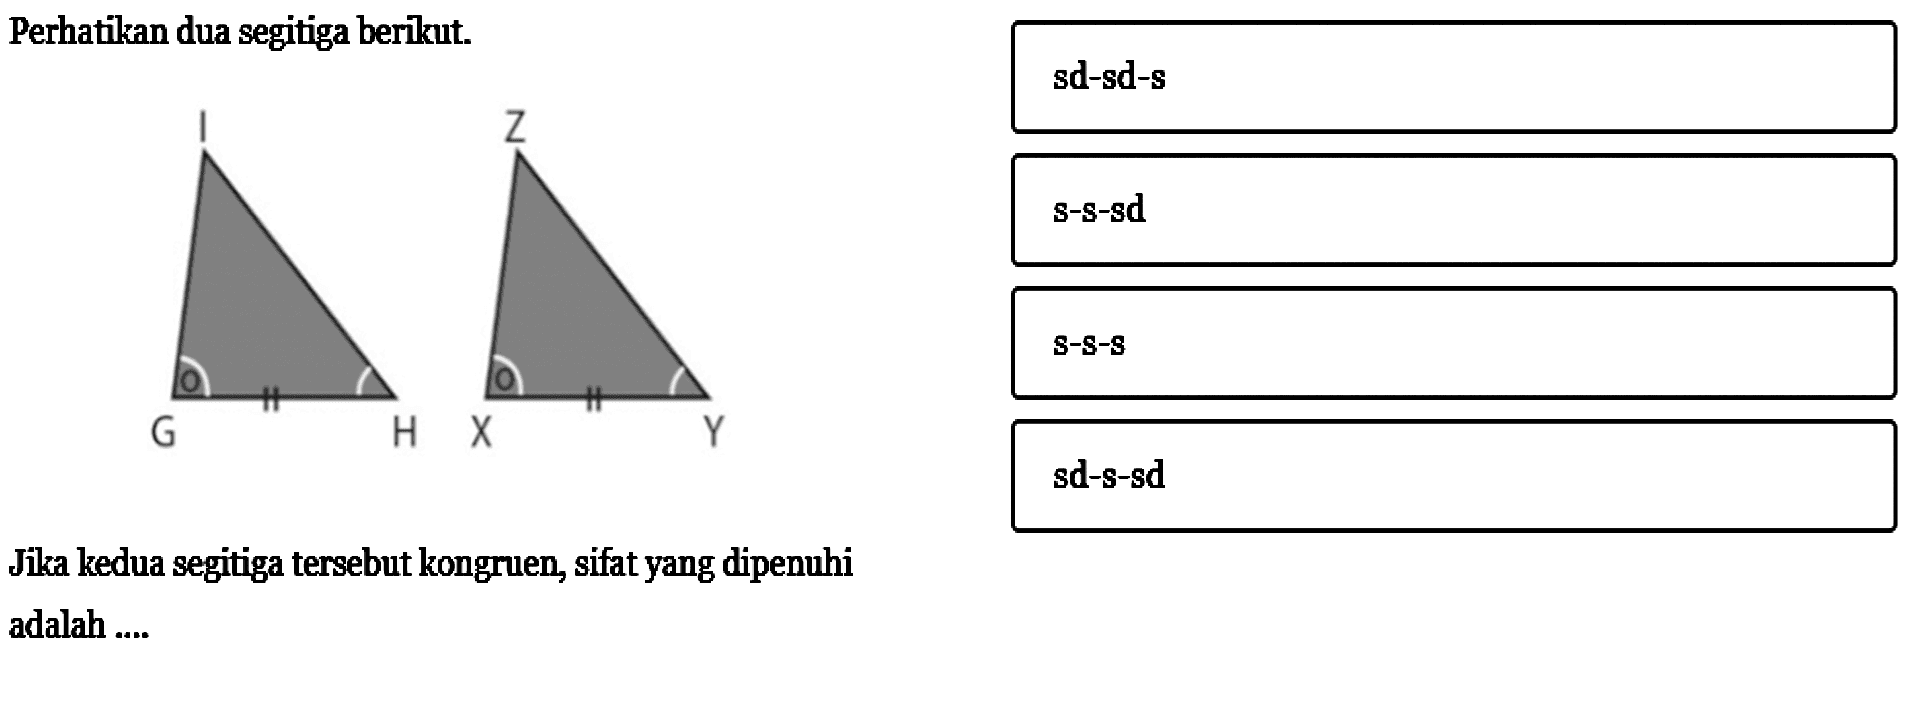 Perhatikan dua segitiga berikut.I Z G H X Y Jika kedua segitiga tersebut kongruen, sifat yang dipenuhi adalah .... sd-sd-s s-s-sd s-s-s sd-s-sd 